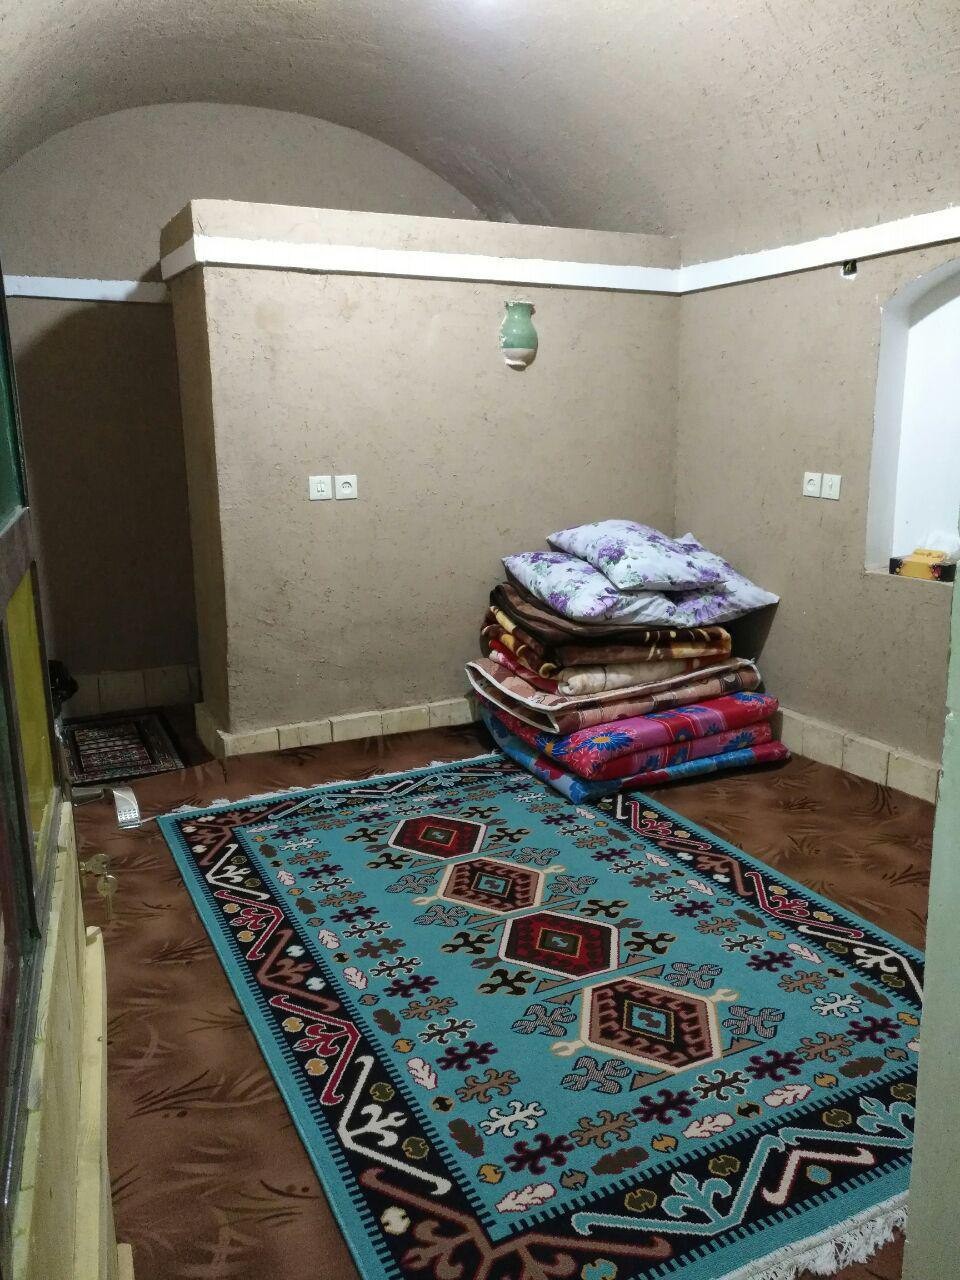 Desert اجاره اقامتگاه بومگردی کویری در کردآباد طبس - اتاق8 